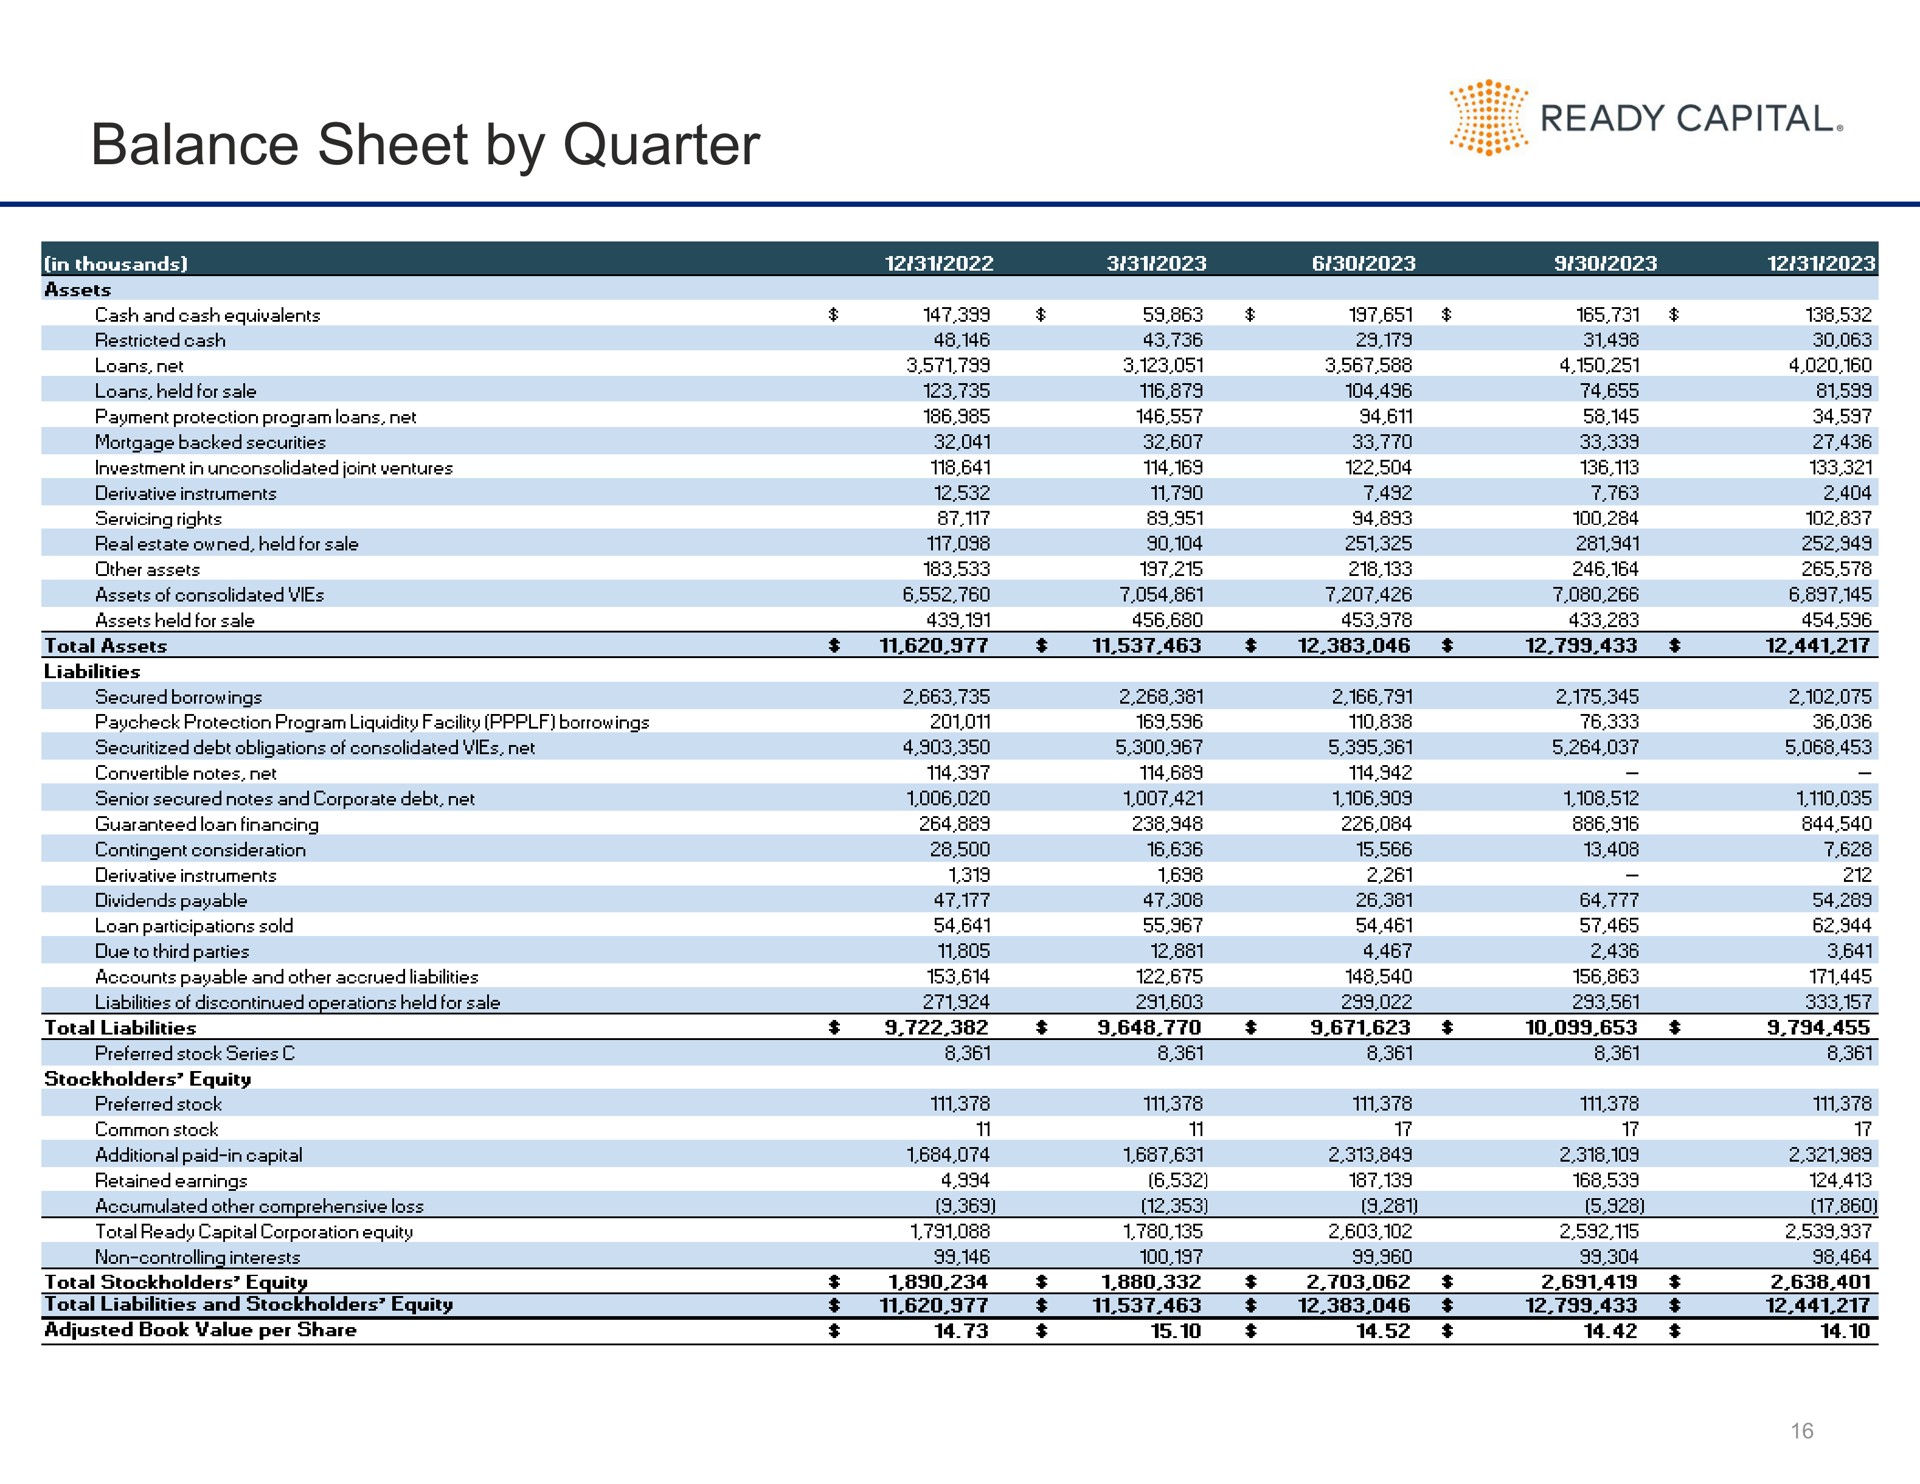 balance sheet by quarter | Ready Capital